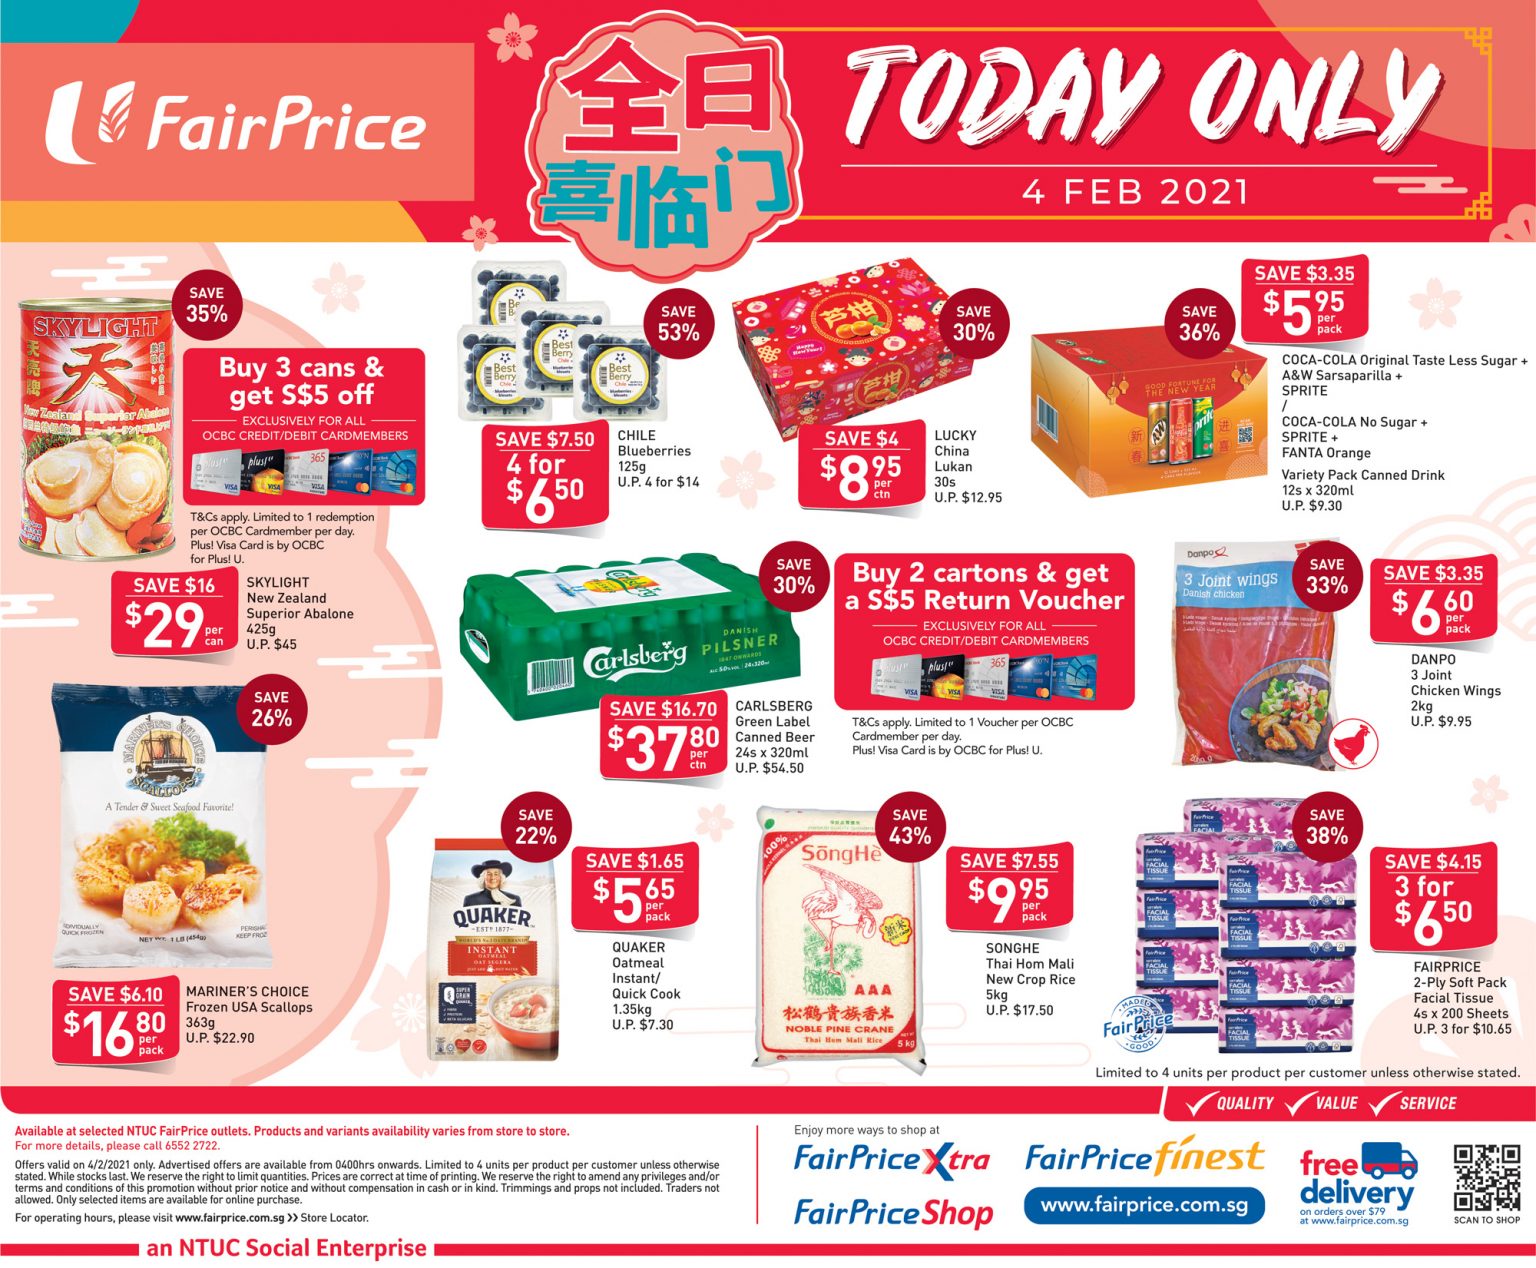 FairPrice 4 Feb only deals